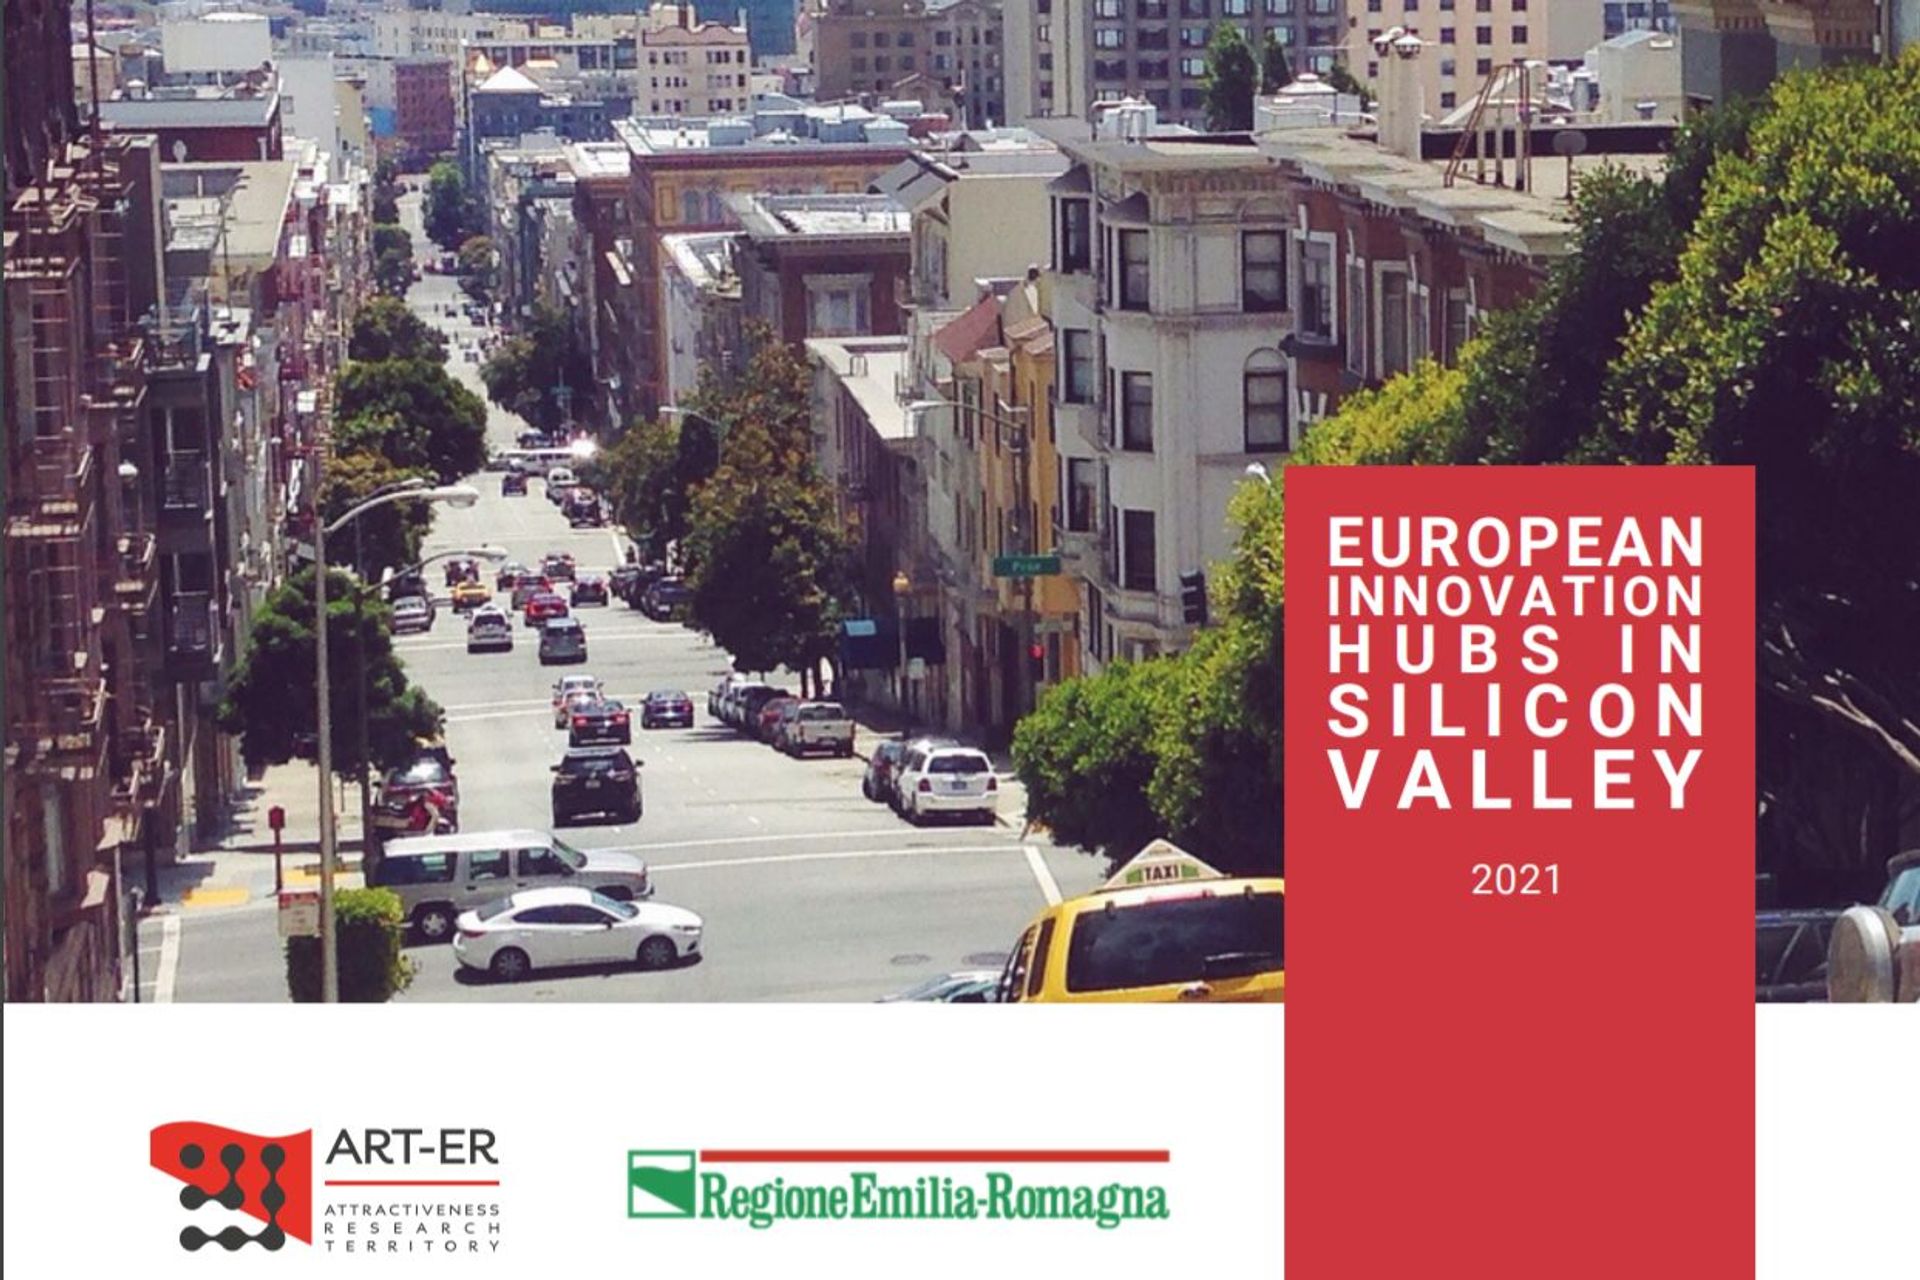 Forsiden av rapporten "European Innovation Hubs in Silicon Valley 2021"